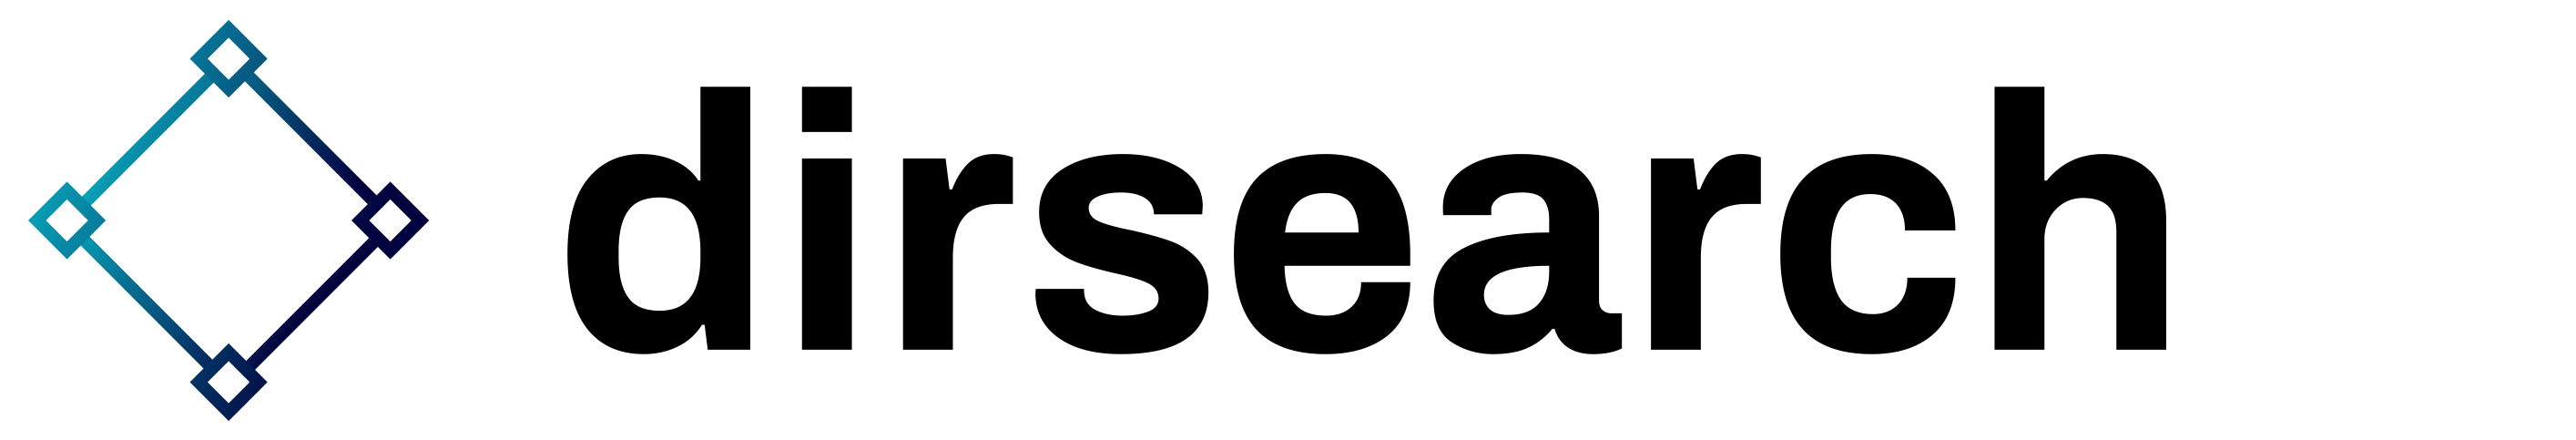 dirsearch logo (light)